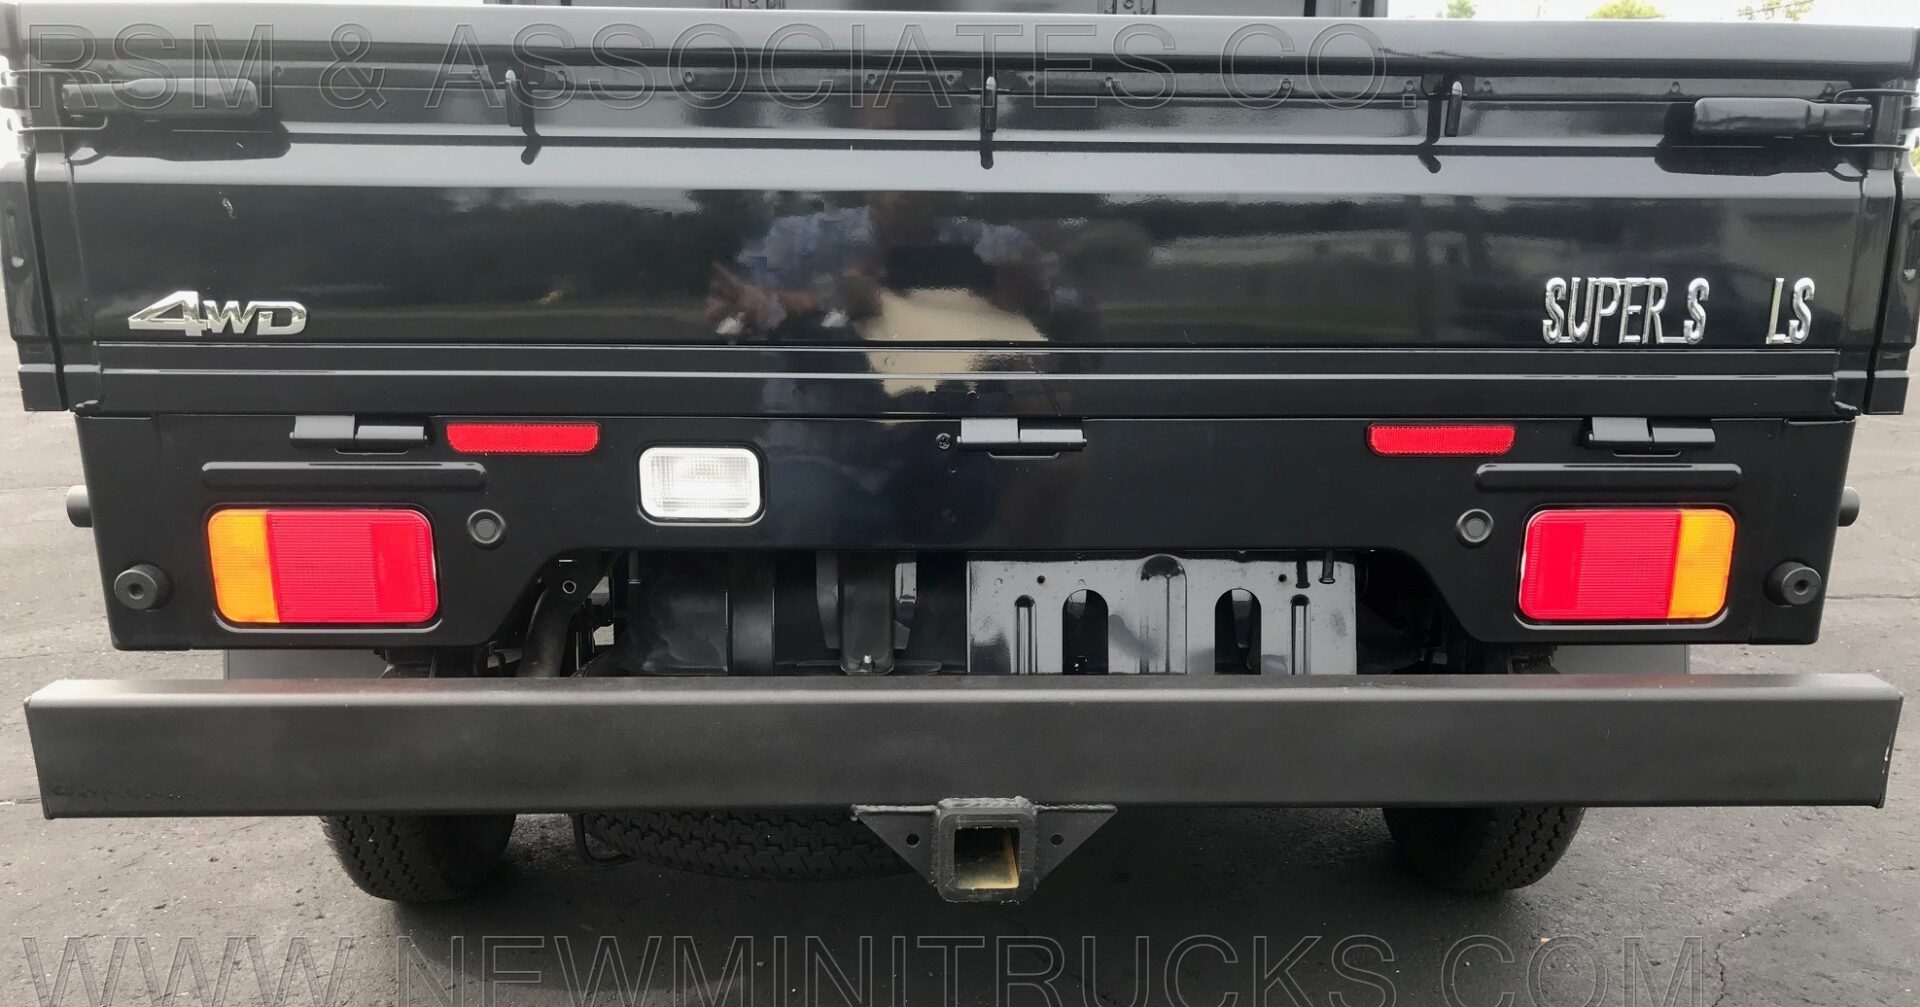 back bumper of a black vehicle